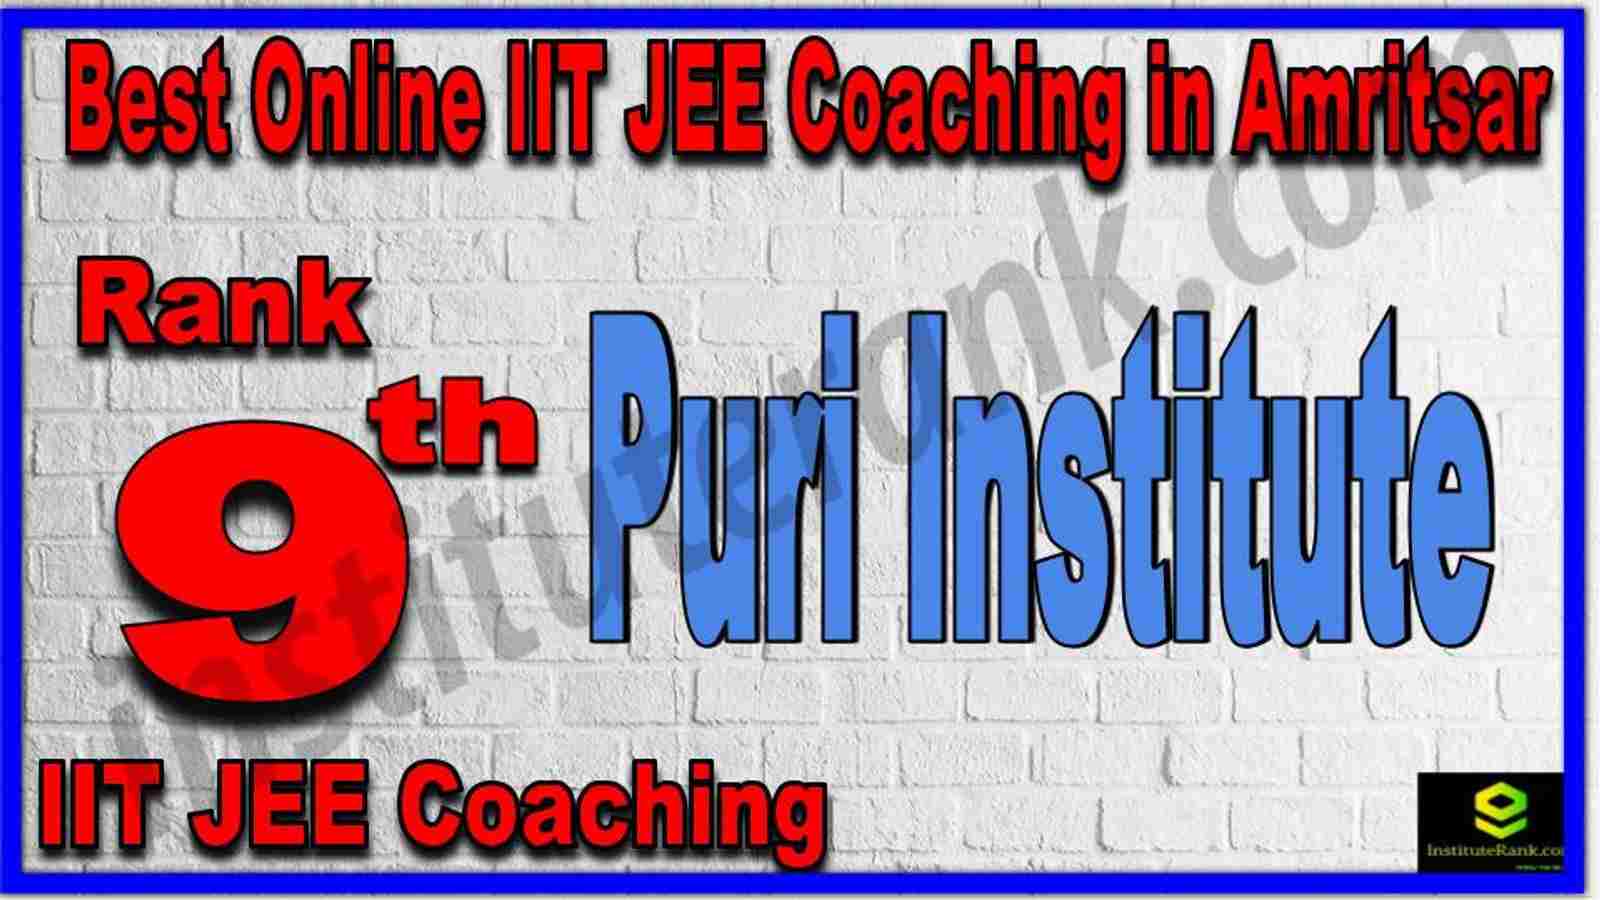 Rank 9th Best Online IIT JEE Coaching in Amritsar